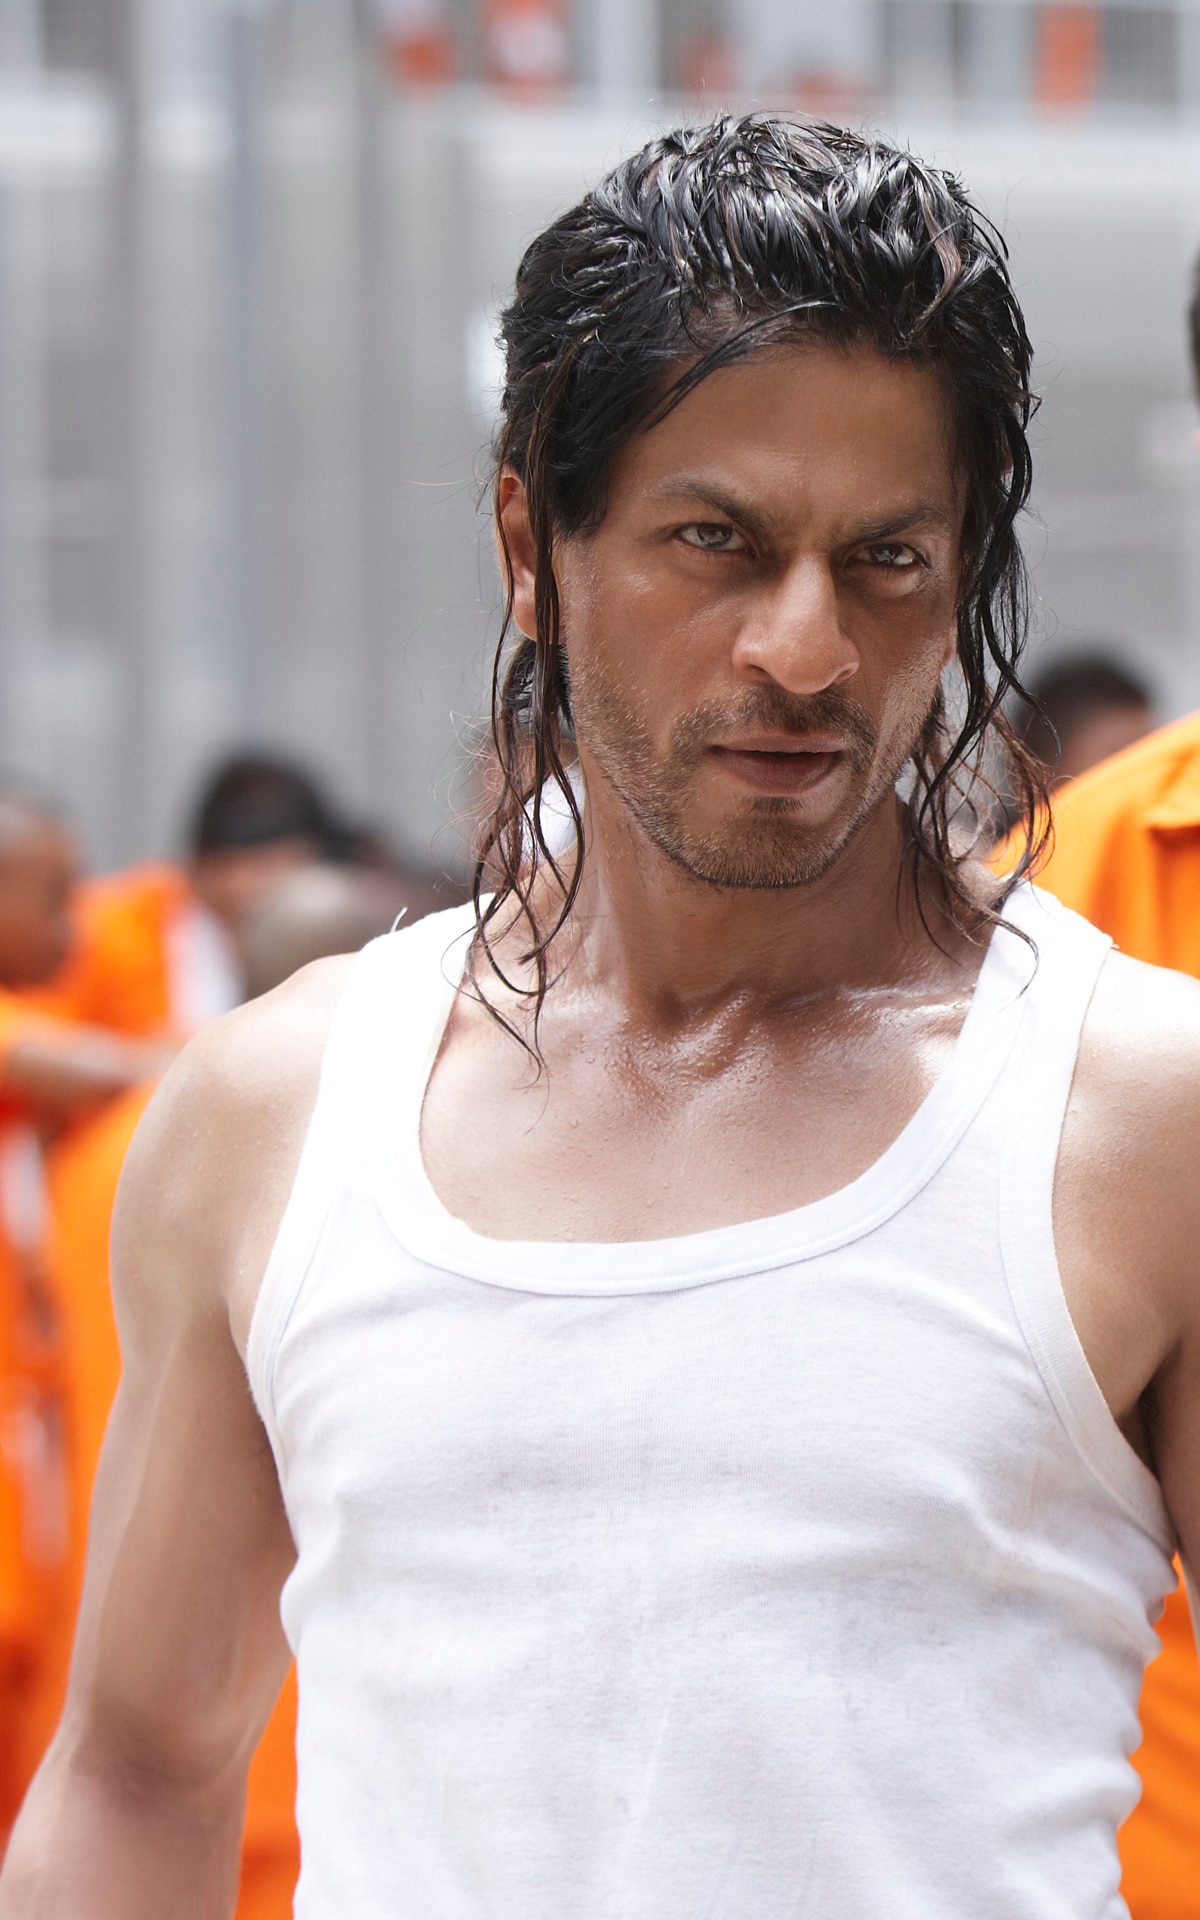 HD wallpaper: Shahrukh Khan Hairstyle In Don 2, Sharukh Khan, Movies,  Bollywood Movies | Wallpaper Flare